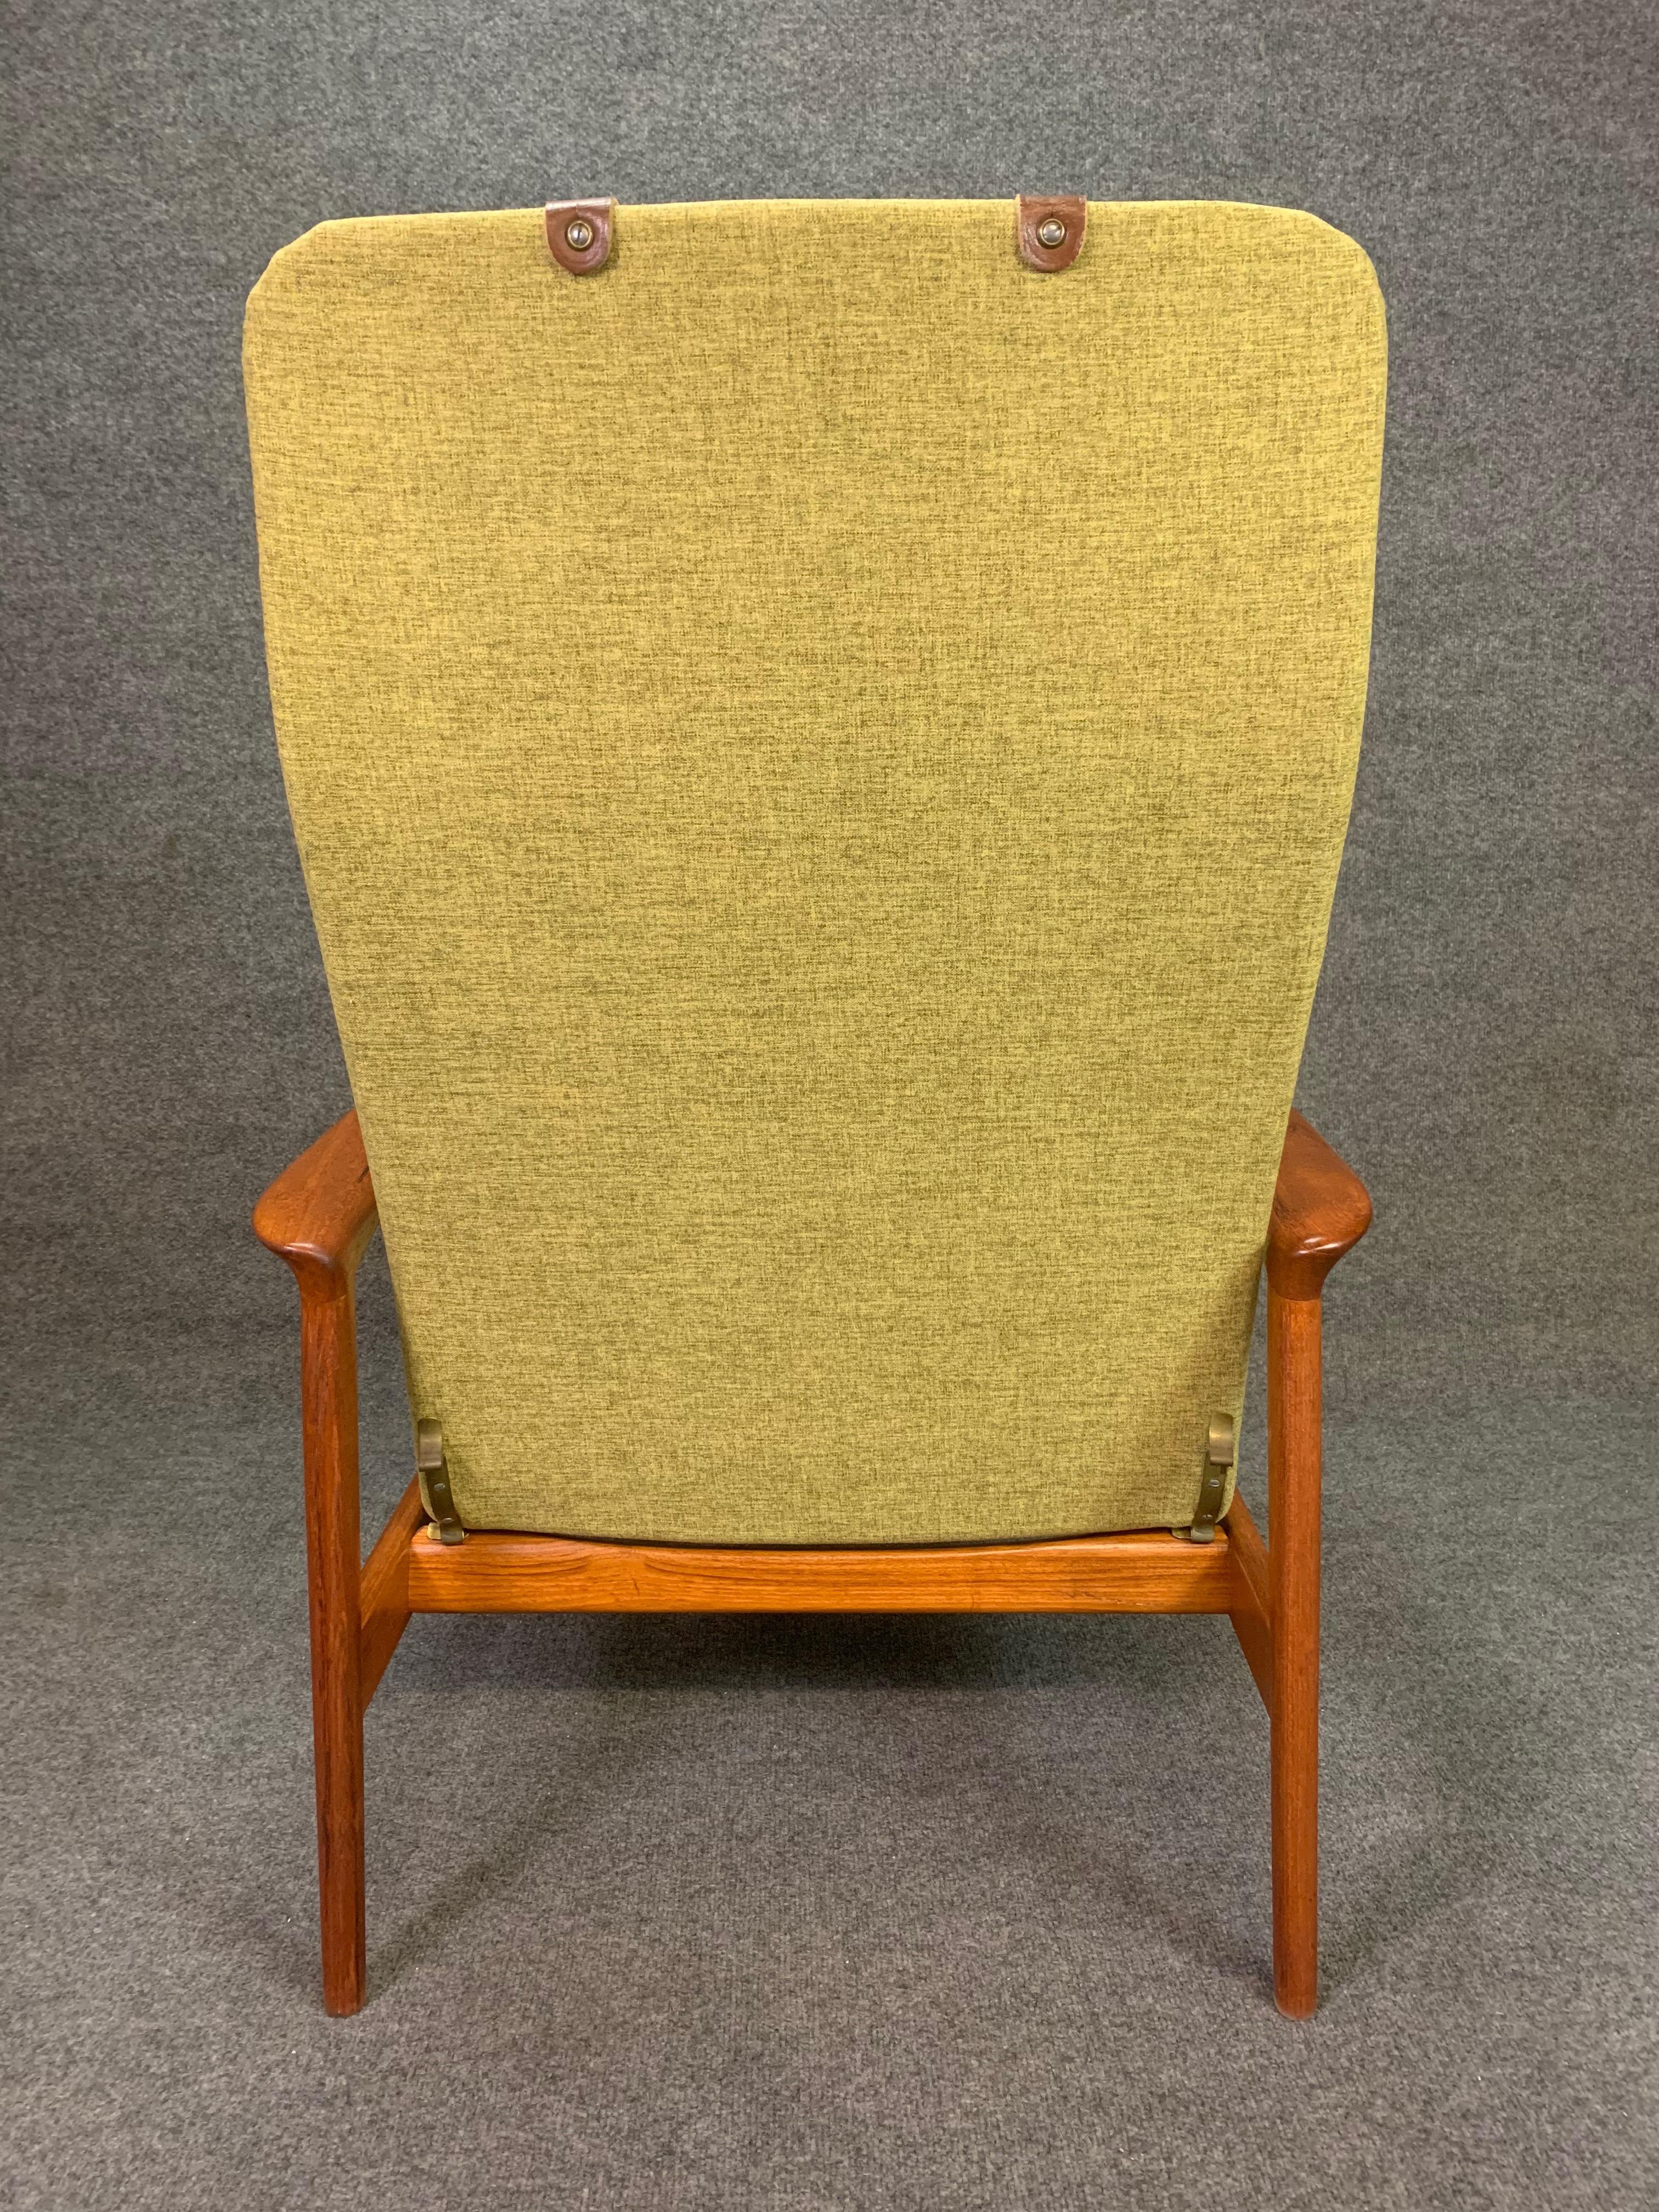 Woodwork Vintage Scandinavian Midcentury Teak DUX Lounge Chair Recliner by Alf Svensson